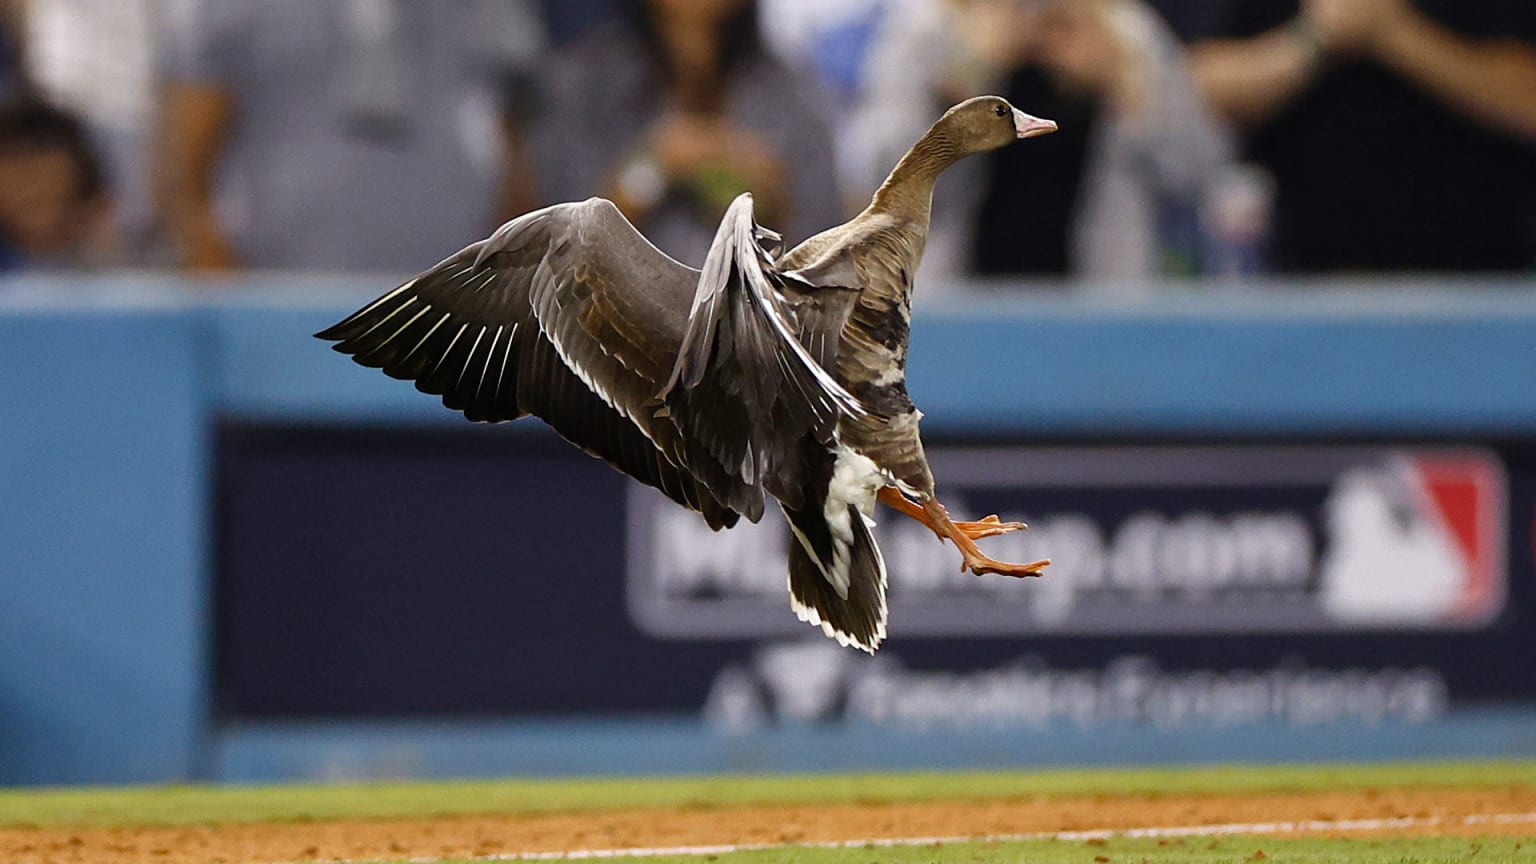 A goose lands on a baseball field